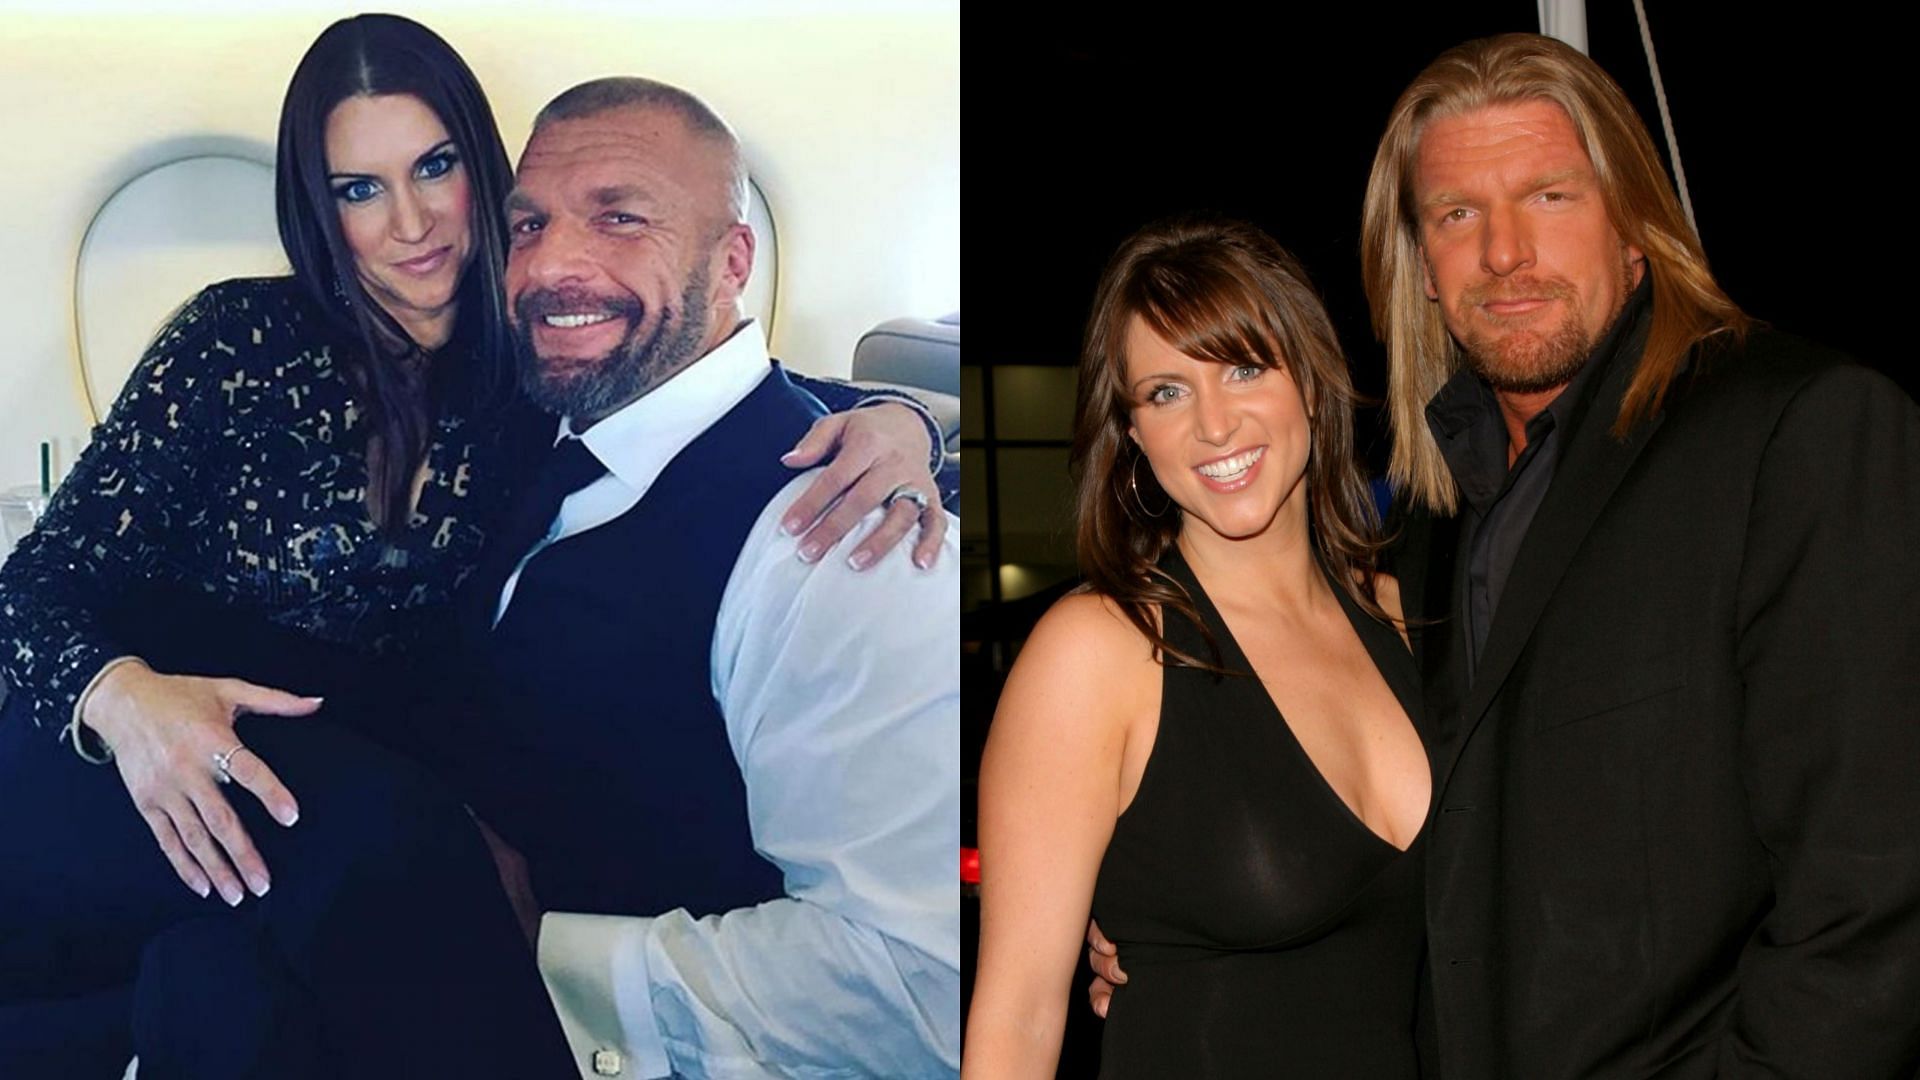 Triple H and Stephanie McMahon currently run WWE